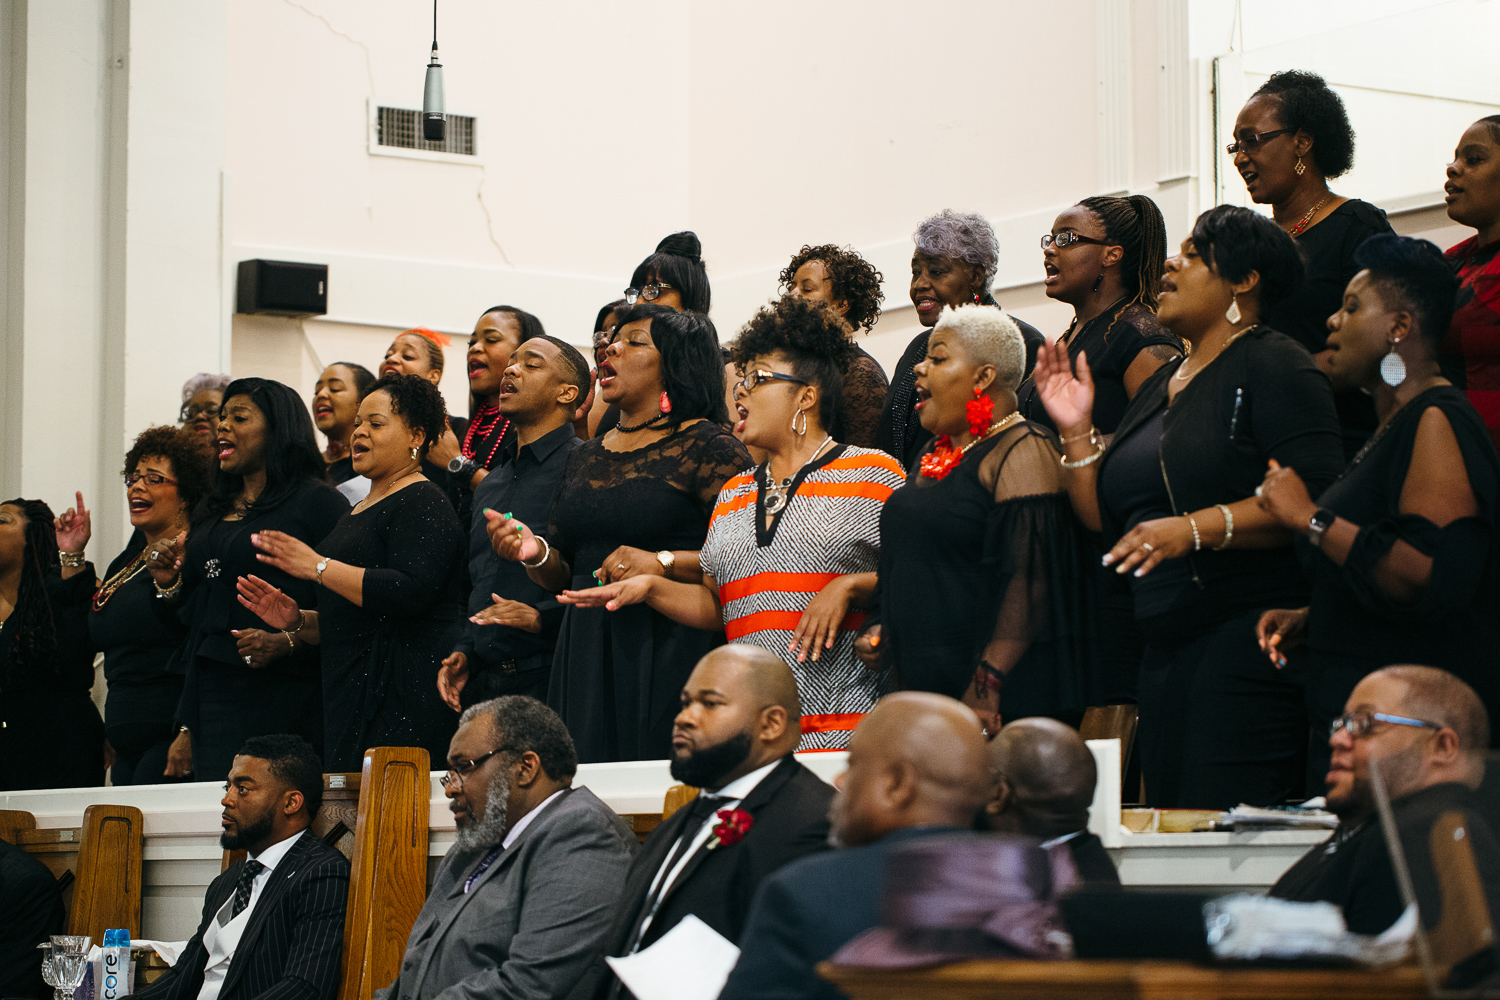 choir singing at church service